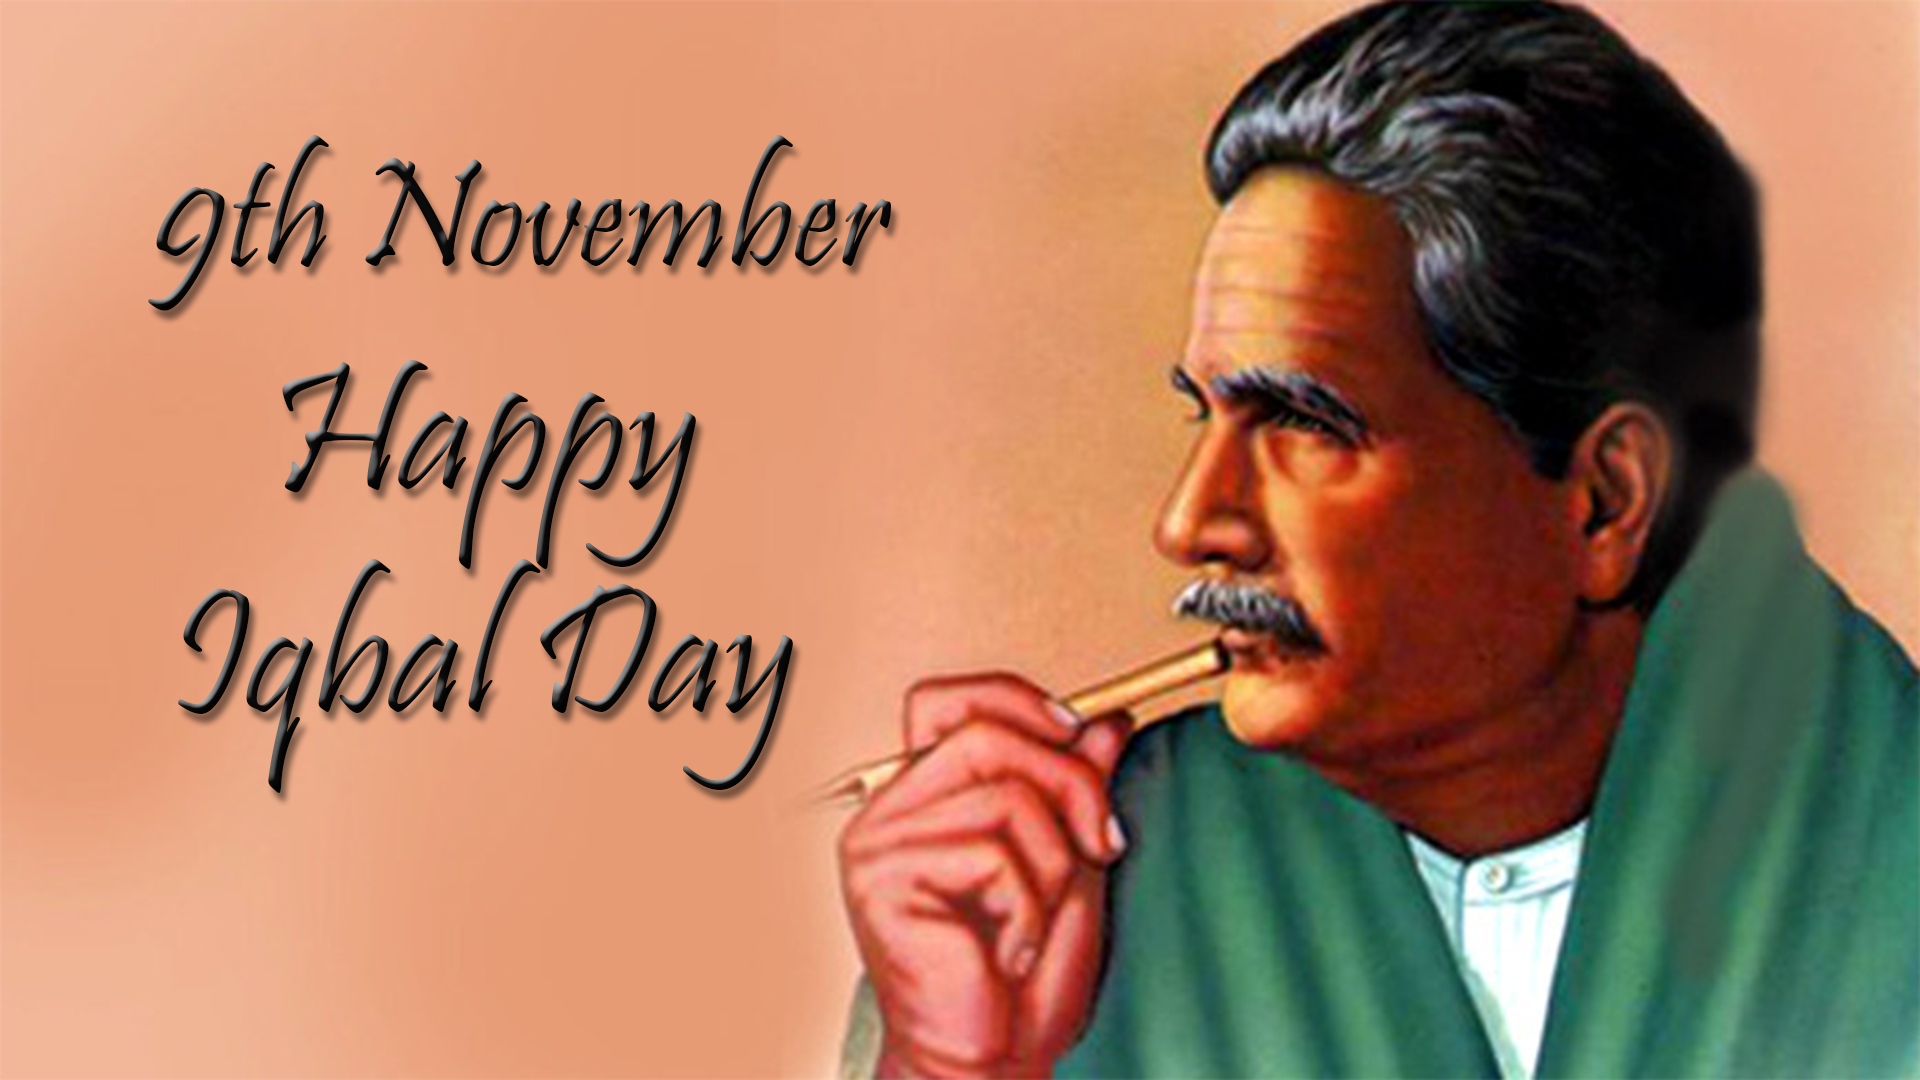 9th November Iqbal day image